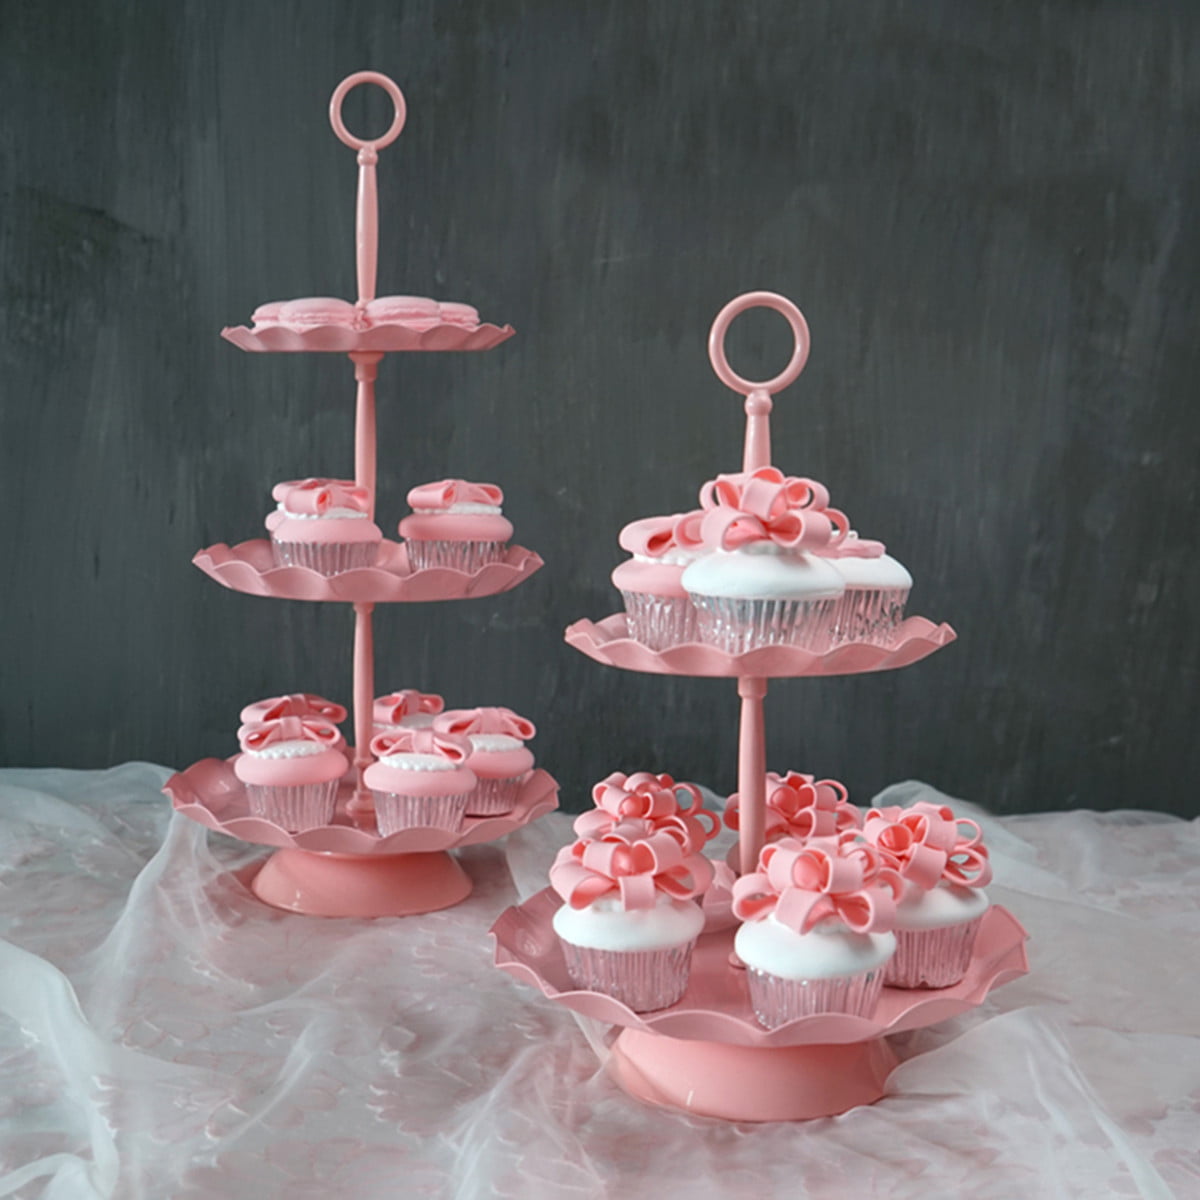 3 Tier Metal Cupcake Stand Holder Tower Wedding Party Dessert Carrier Display 